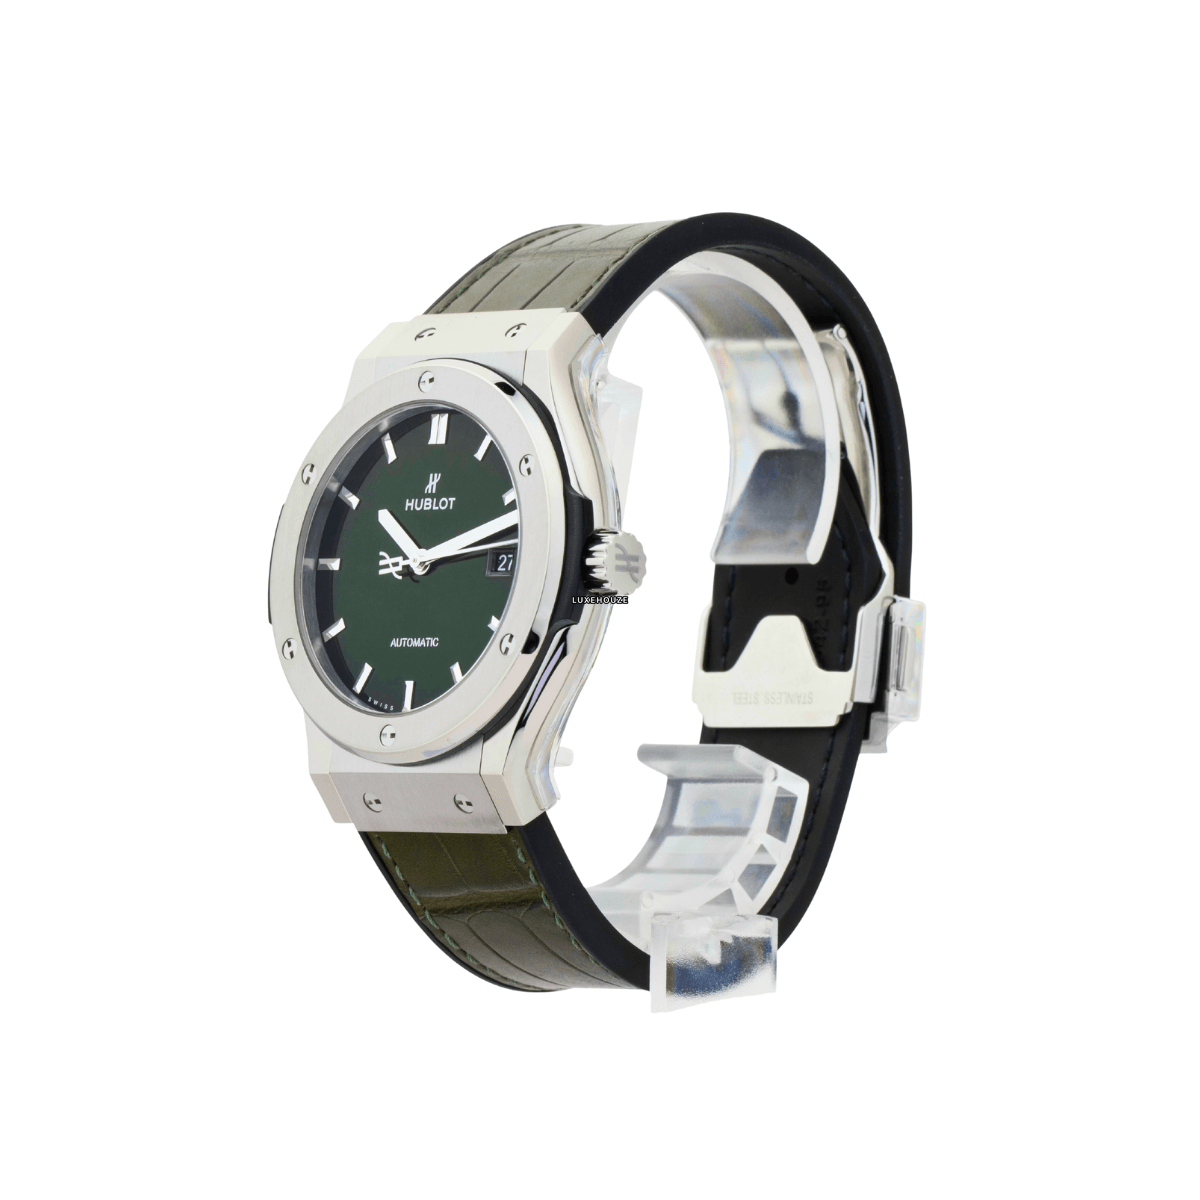 Hublot Classic Fusion Men's Black Watch - 542.NX.1171.RX